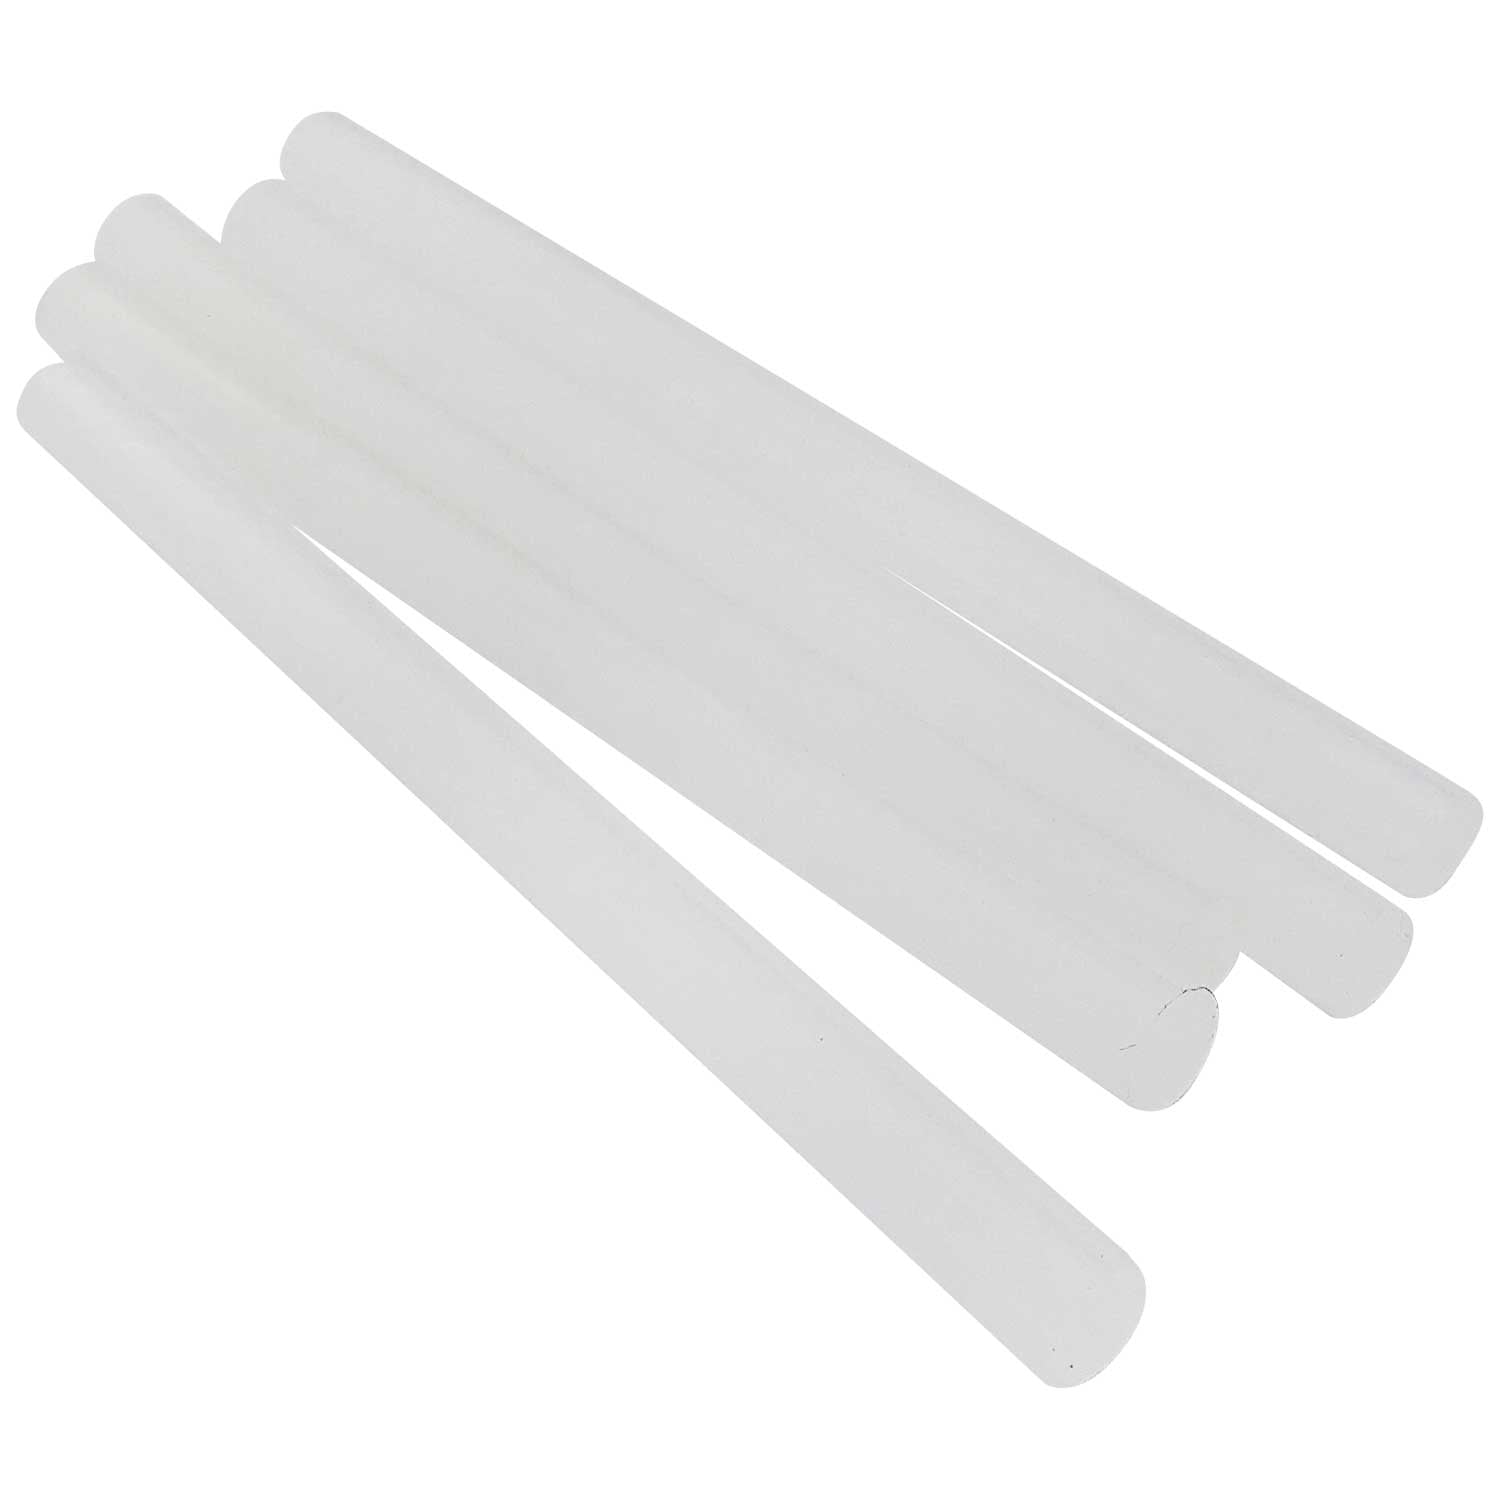 7mm x 4 (0.25 x 4) Long Mini Glue Sticks for Small Glue Guns Bulk, Adhesives, Multi Use Glue Sticks, Hot Melt Glue Stick Super Transparent (24